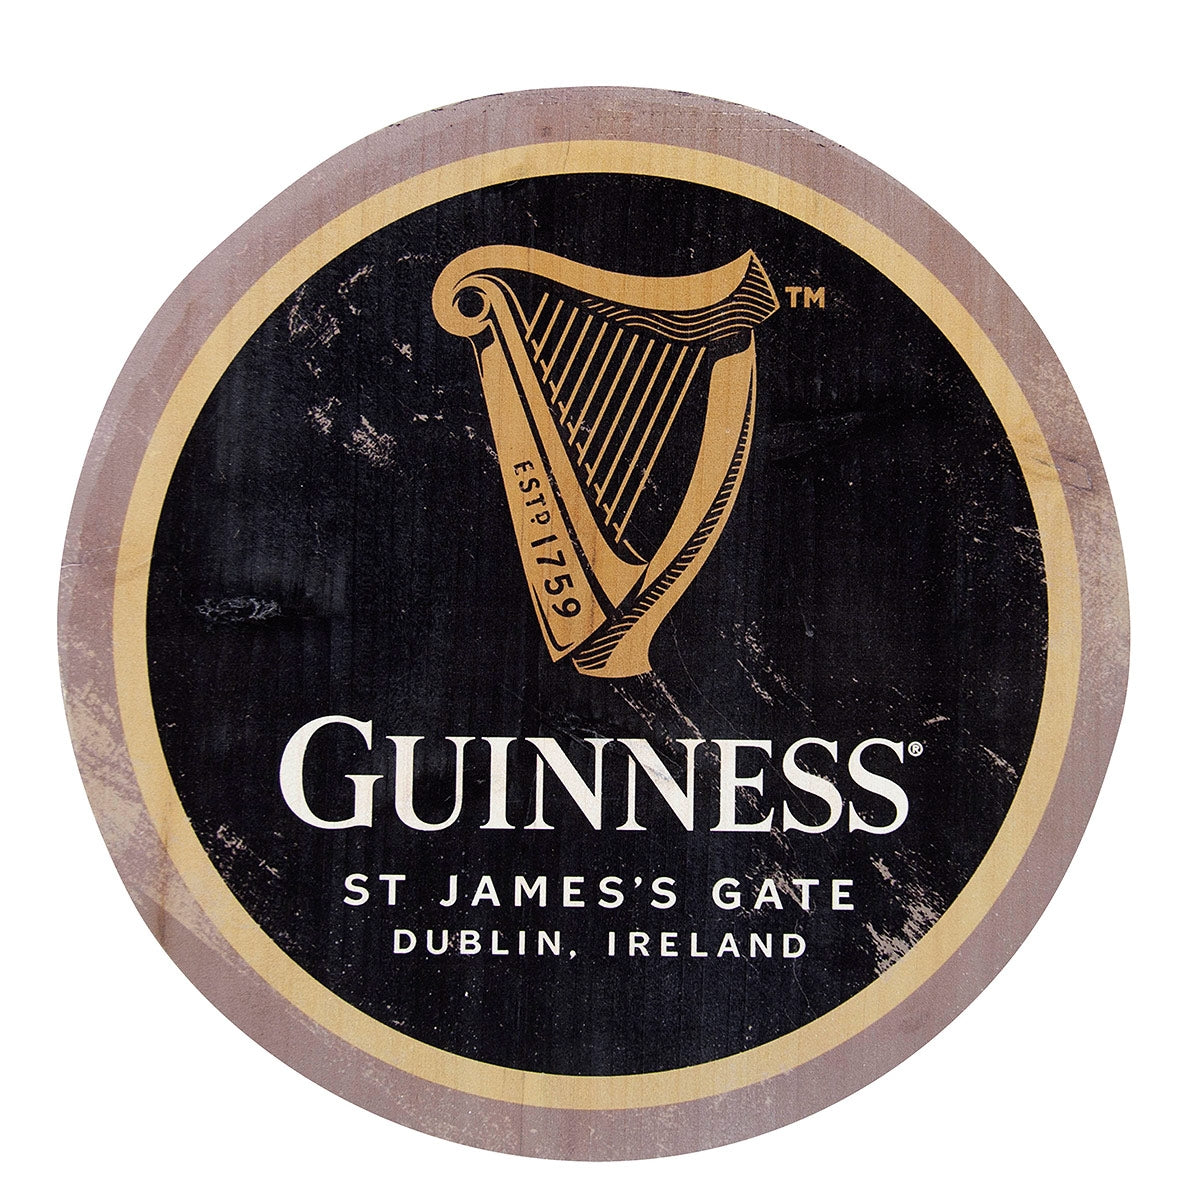 Guinness Harp Wooden Bottle Top at St. James's Gate wooden sign.